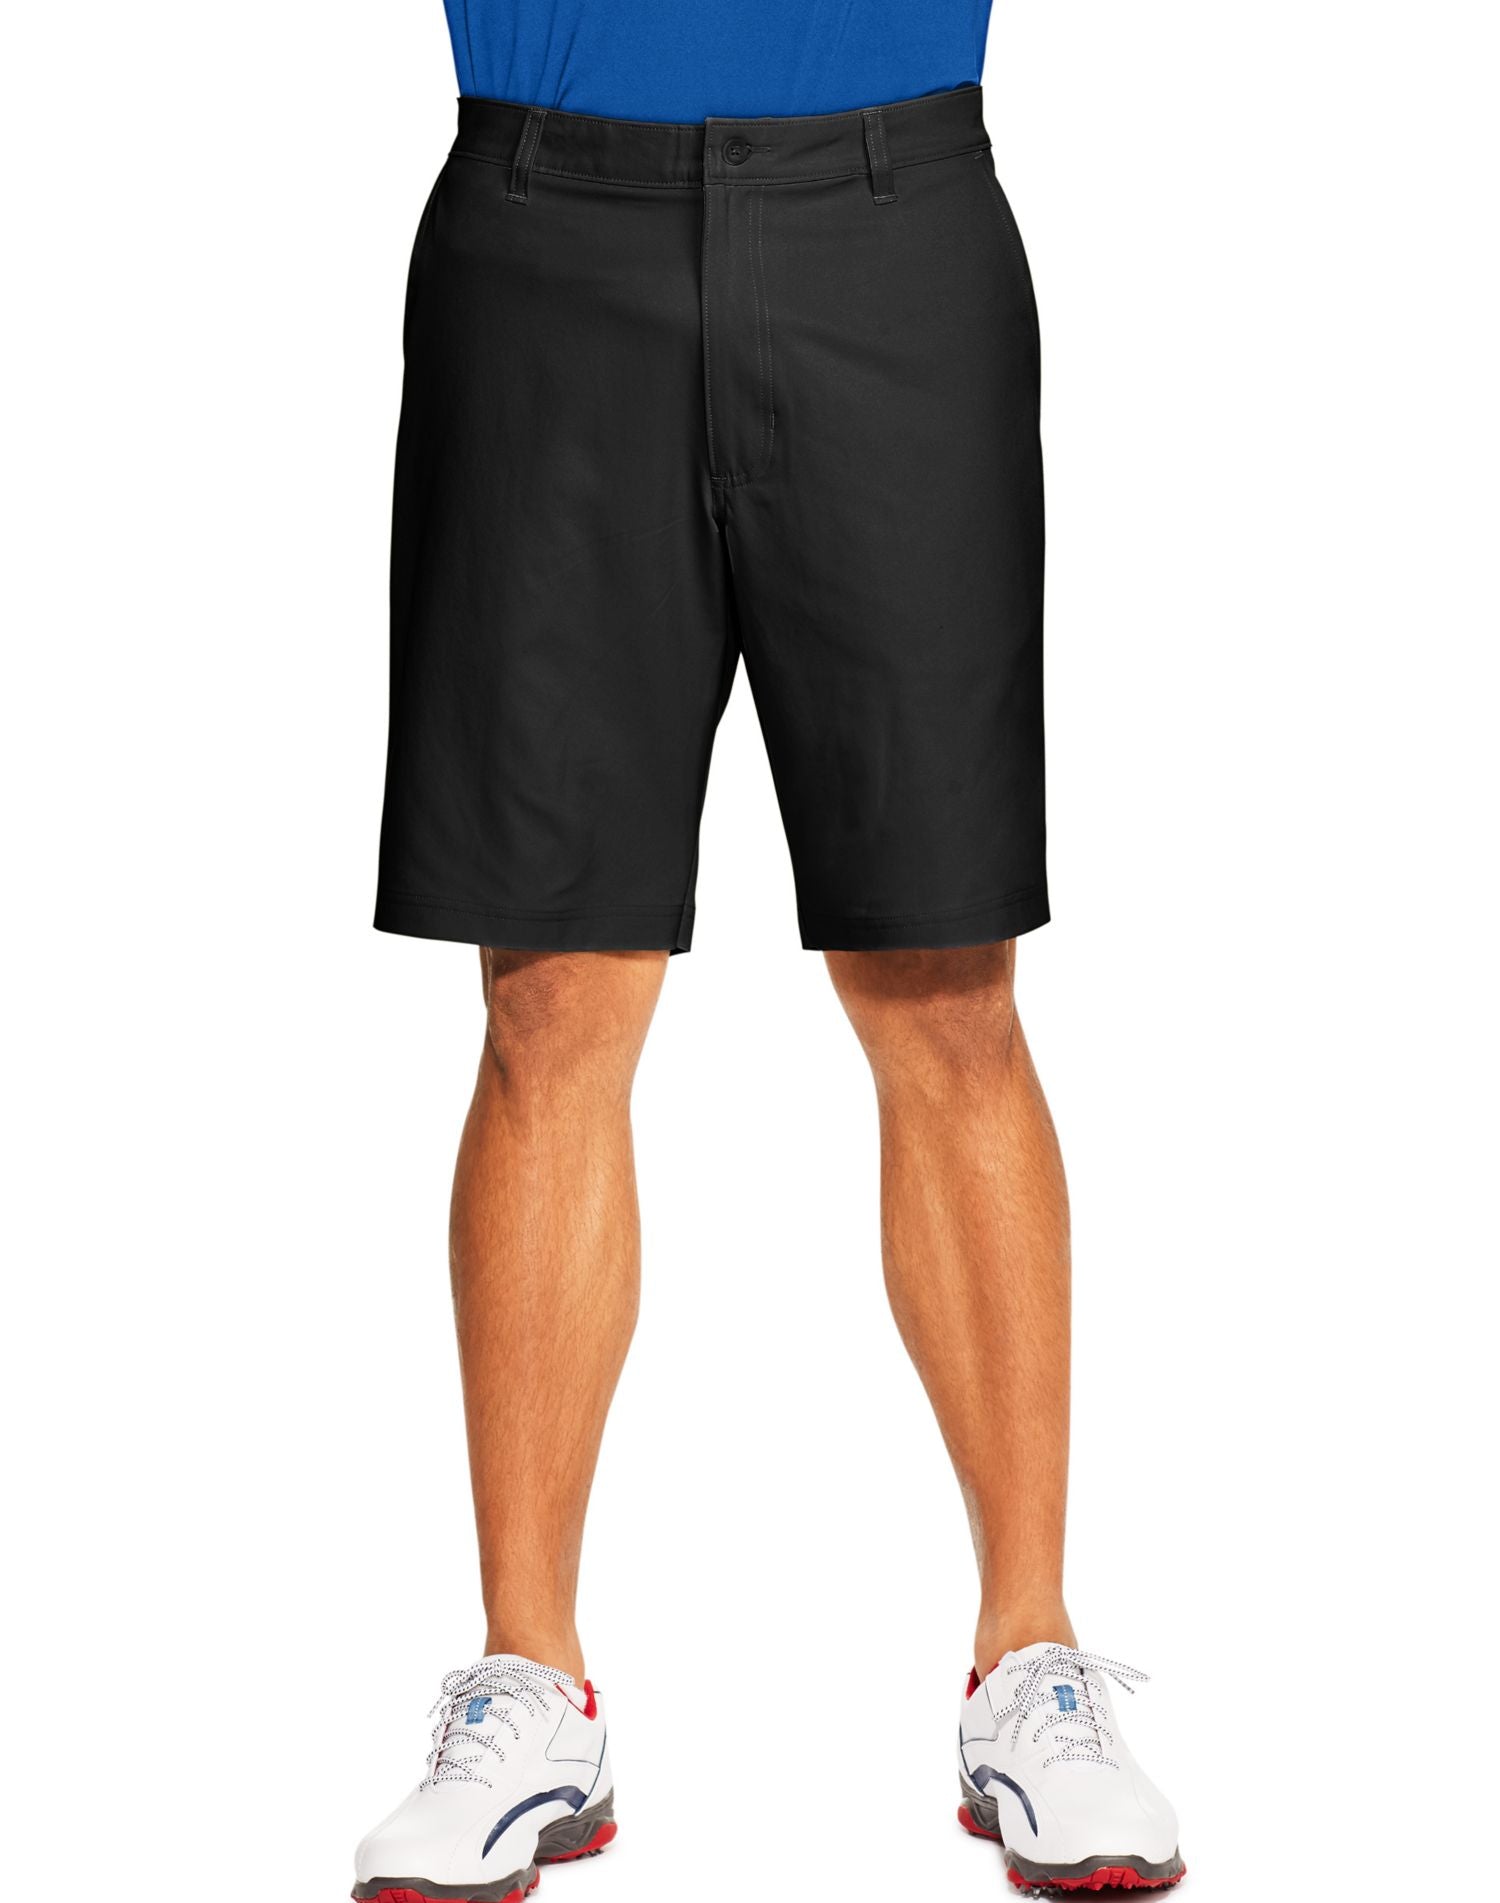 80002 - Champion Mens Performance Golf Shorts